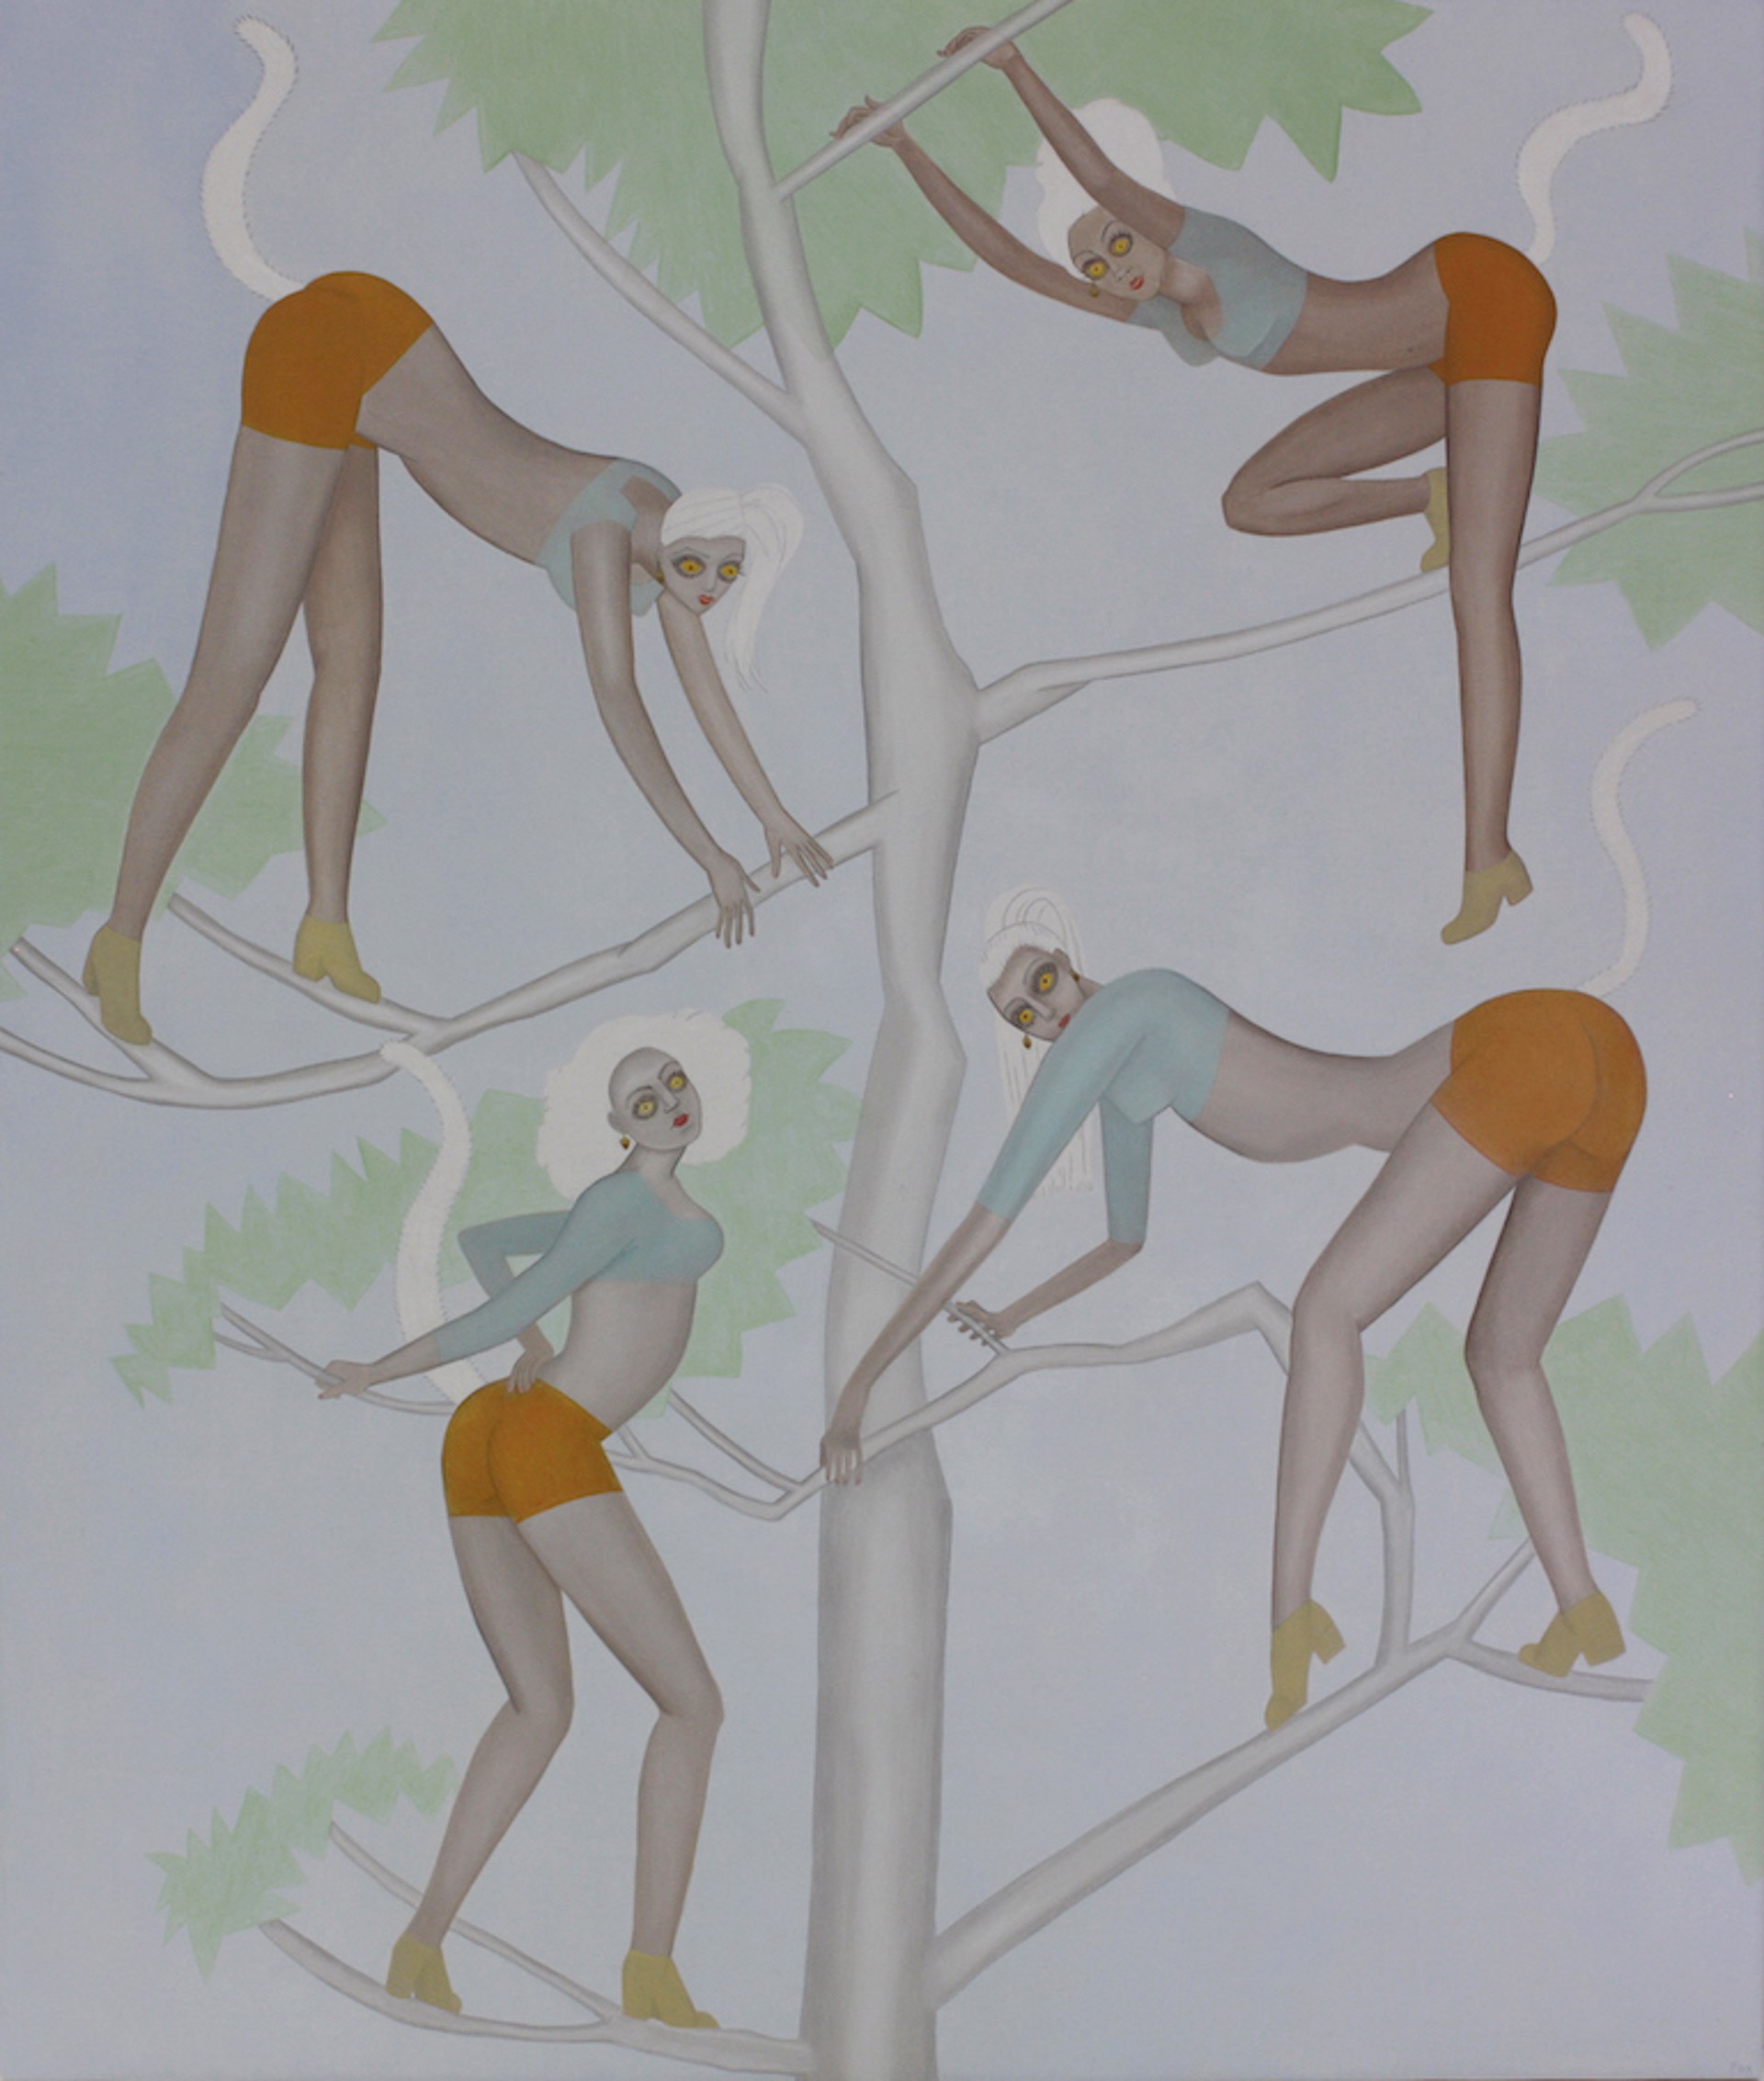 The Lemur Dancers by Elizabeth Fox